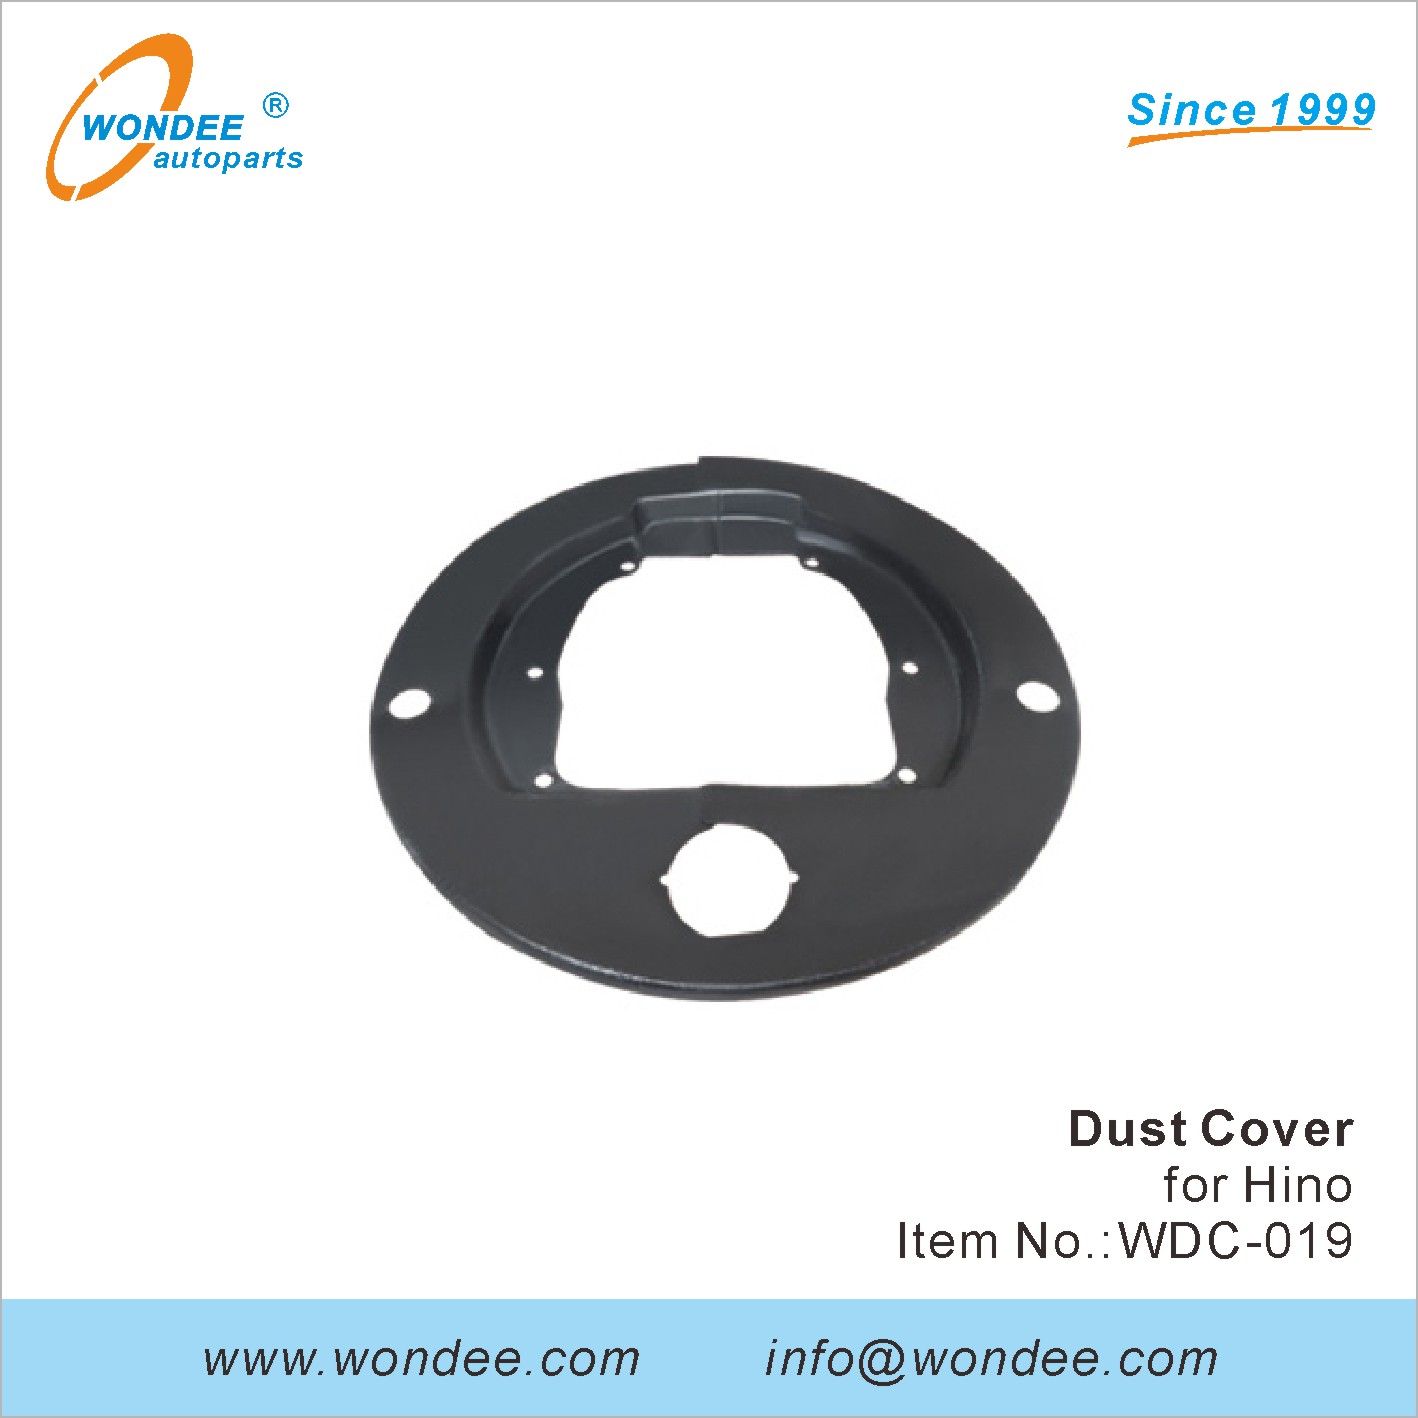 WONDEE dust cover (19)